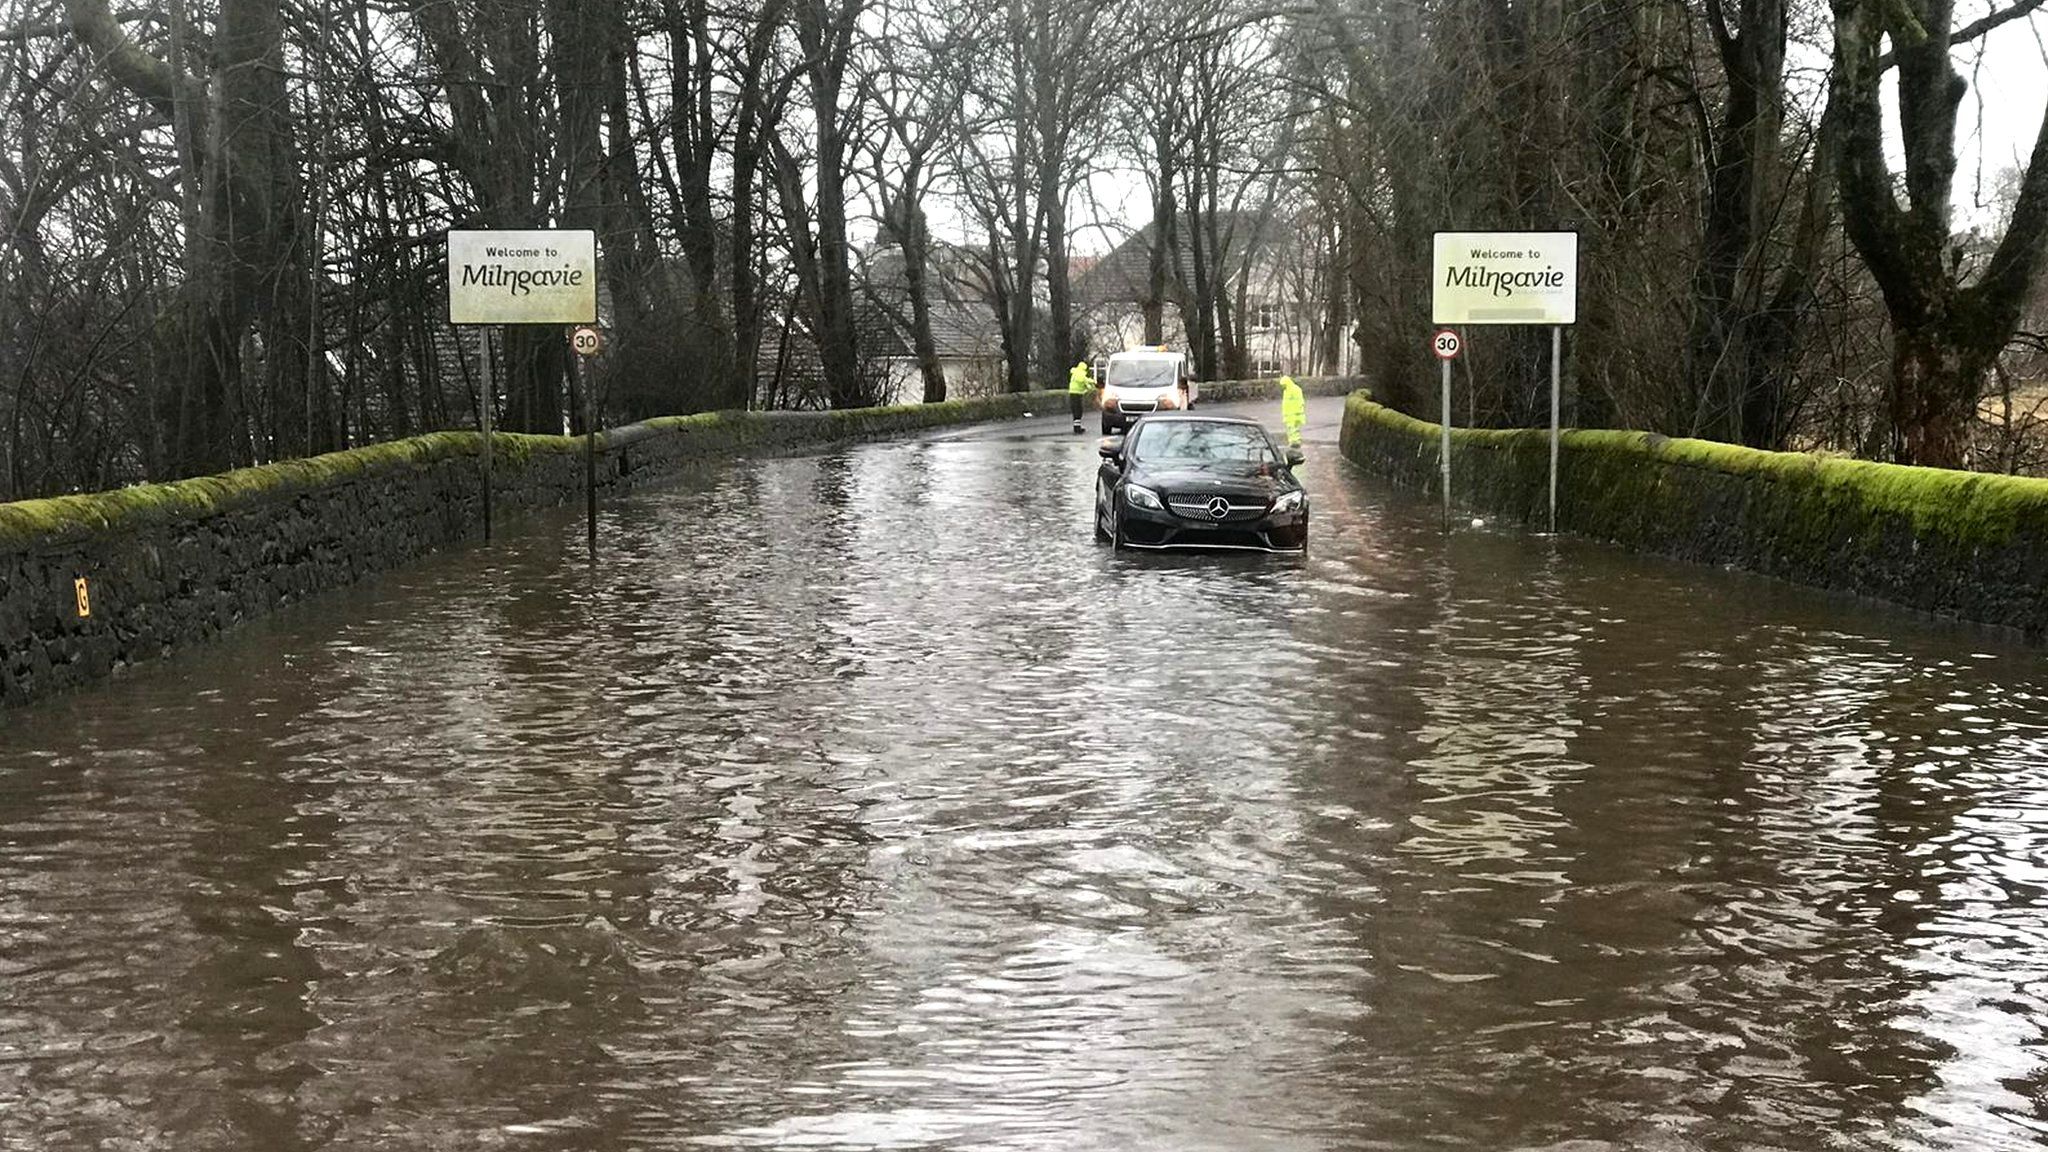 Flooding in Milngavie